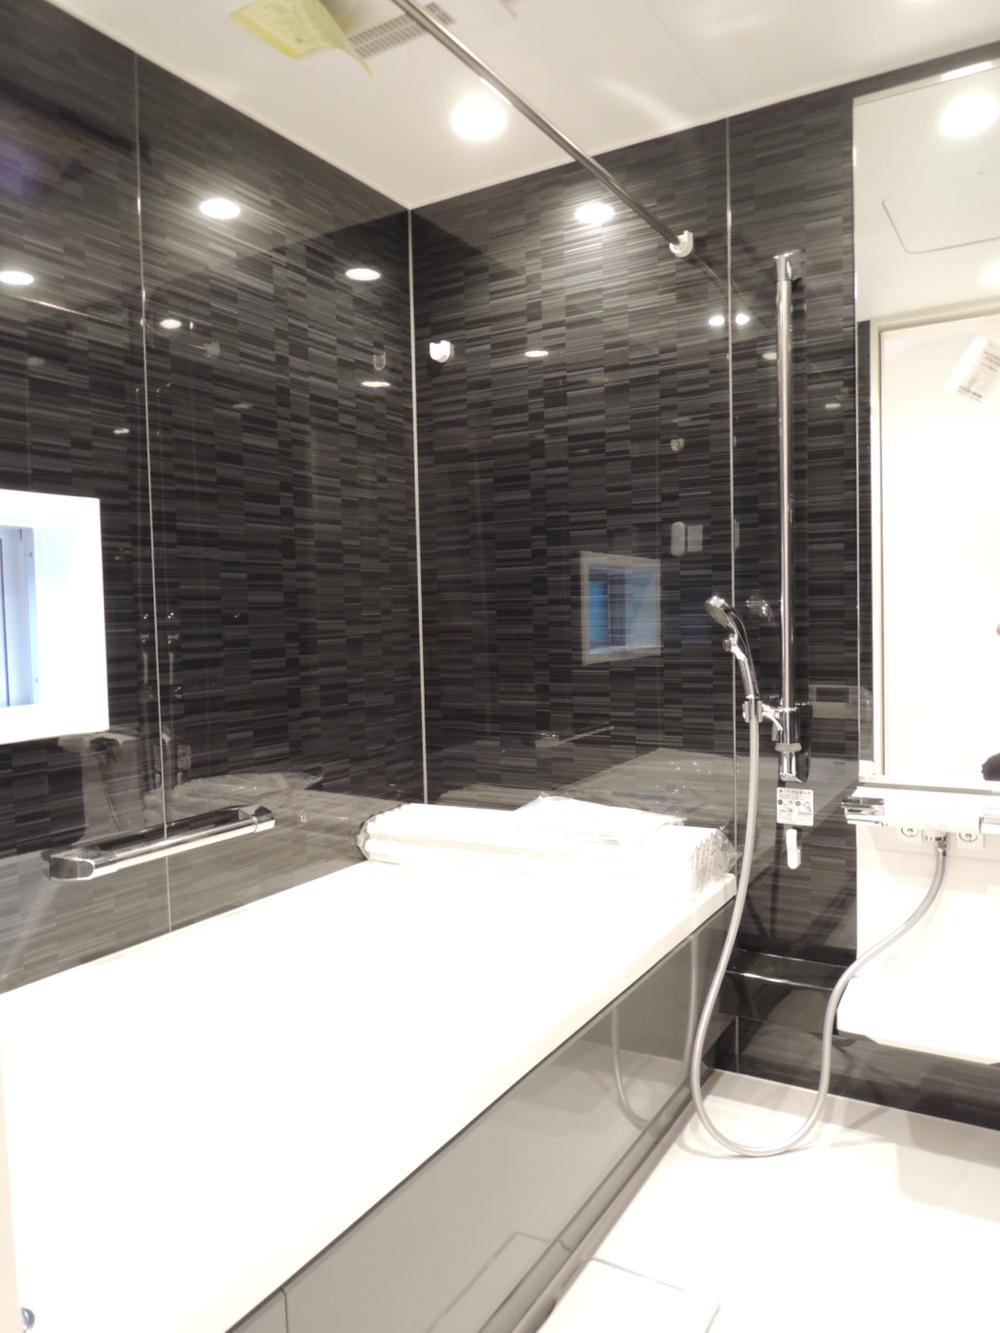 Same specifications photo (bathroom). Unit bus bathroom with ventilation dryer (same specifications)